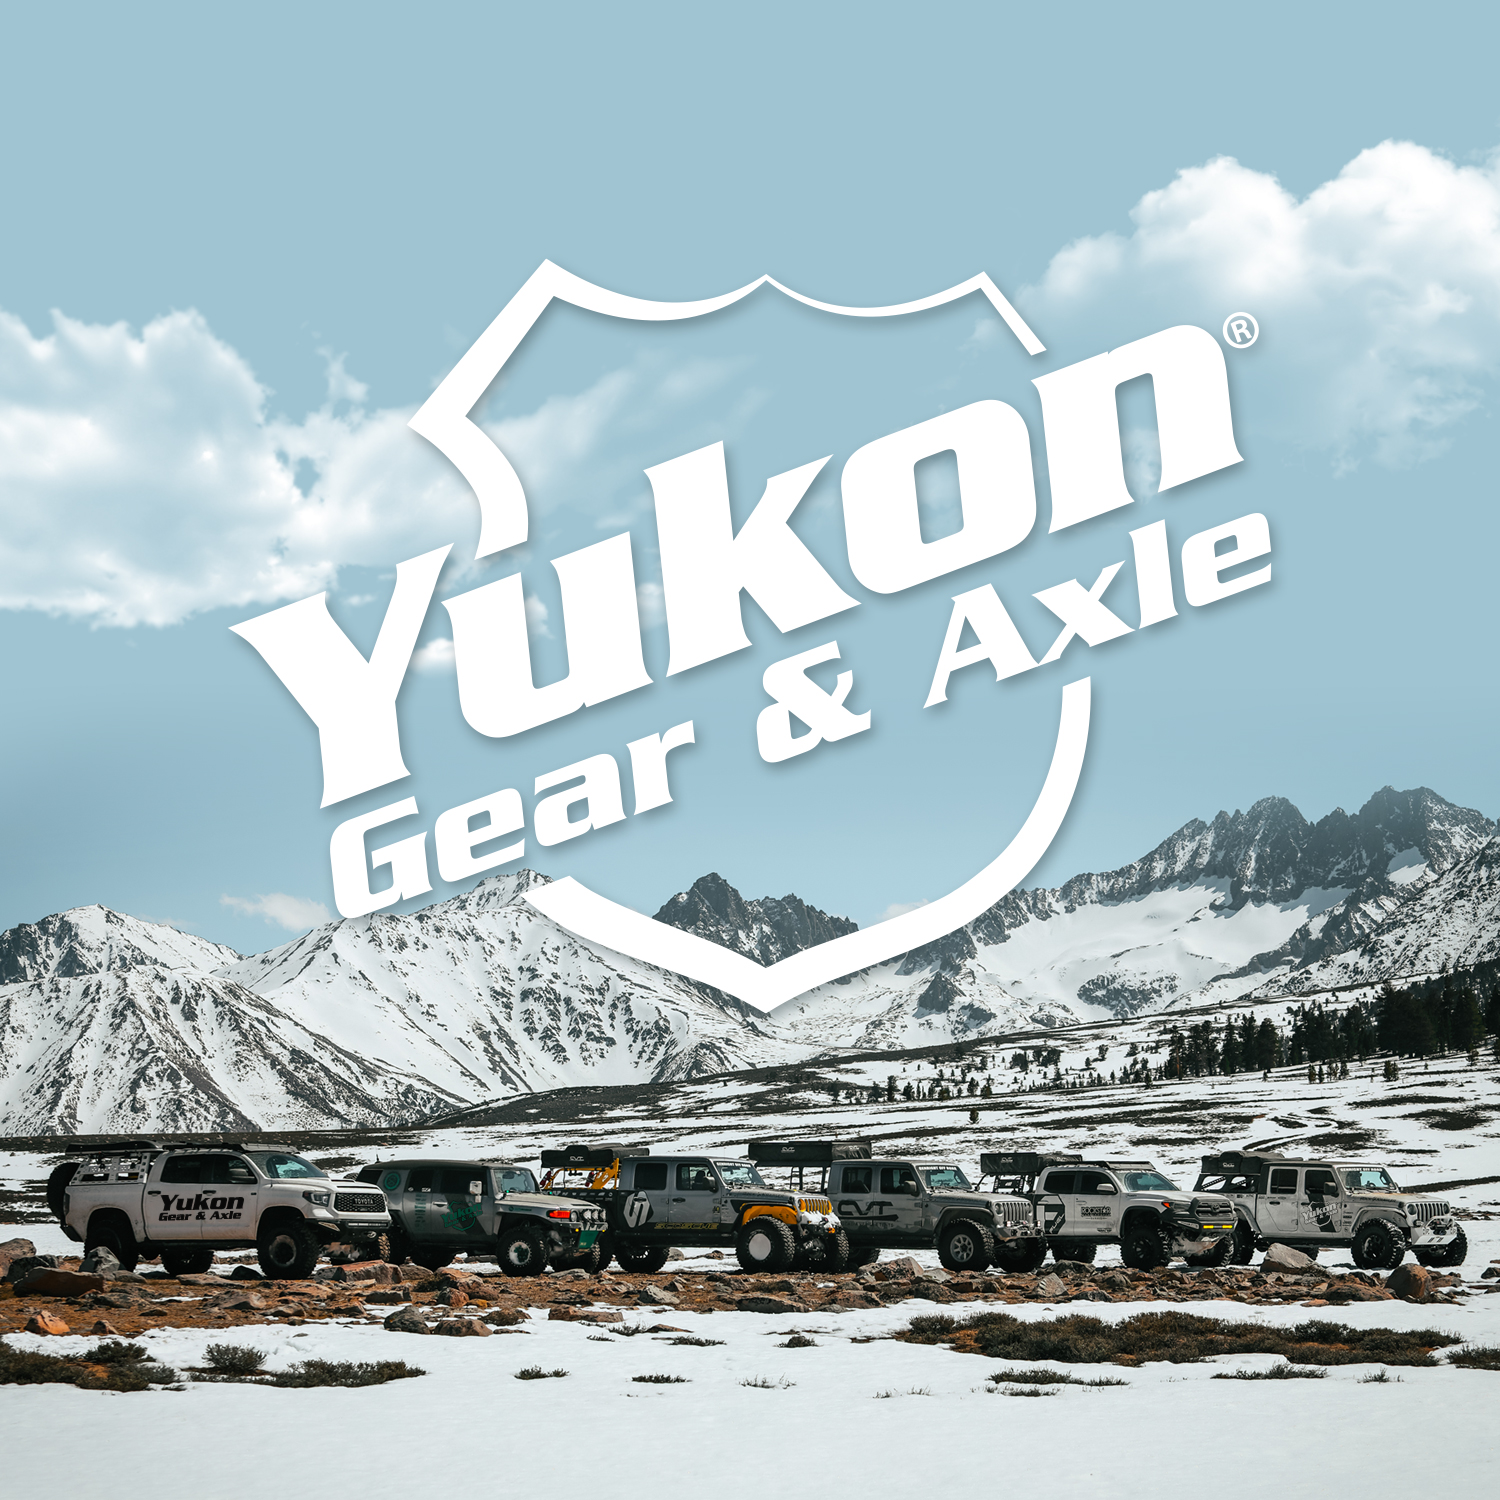 Yukon high performance replacement ring & pinion set, Dana 44 HD, 3.90 ratio 